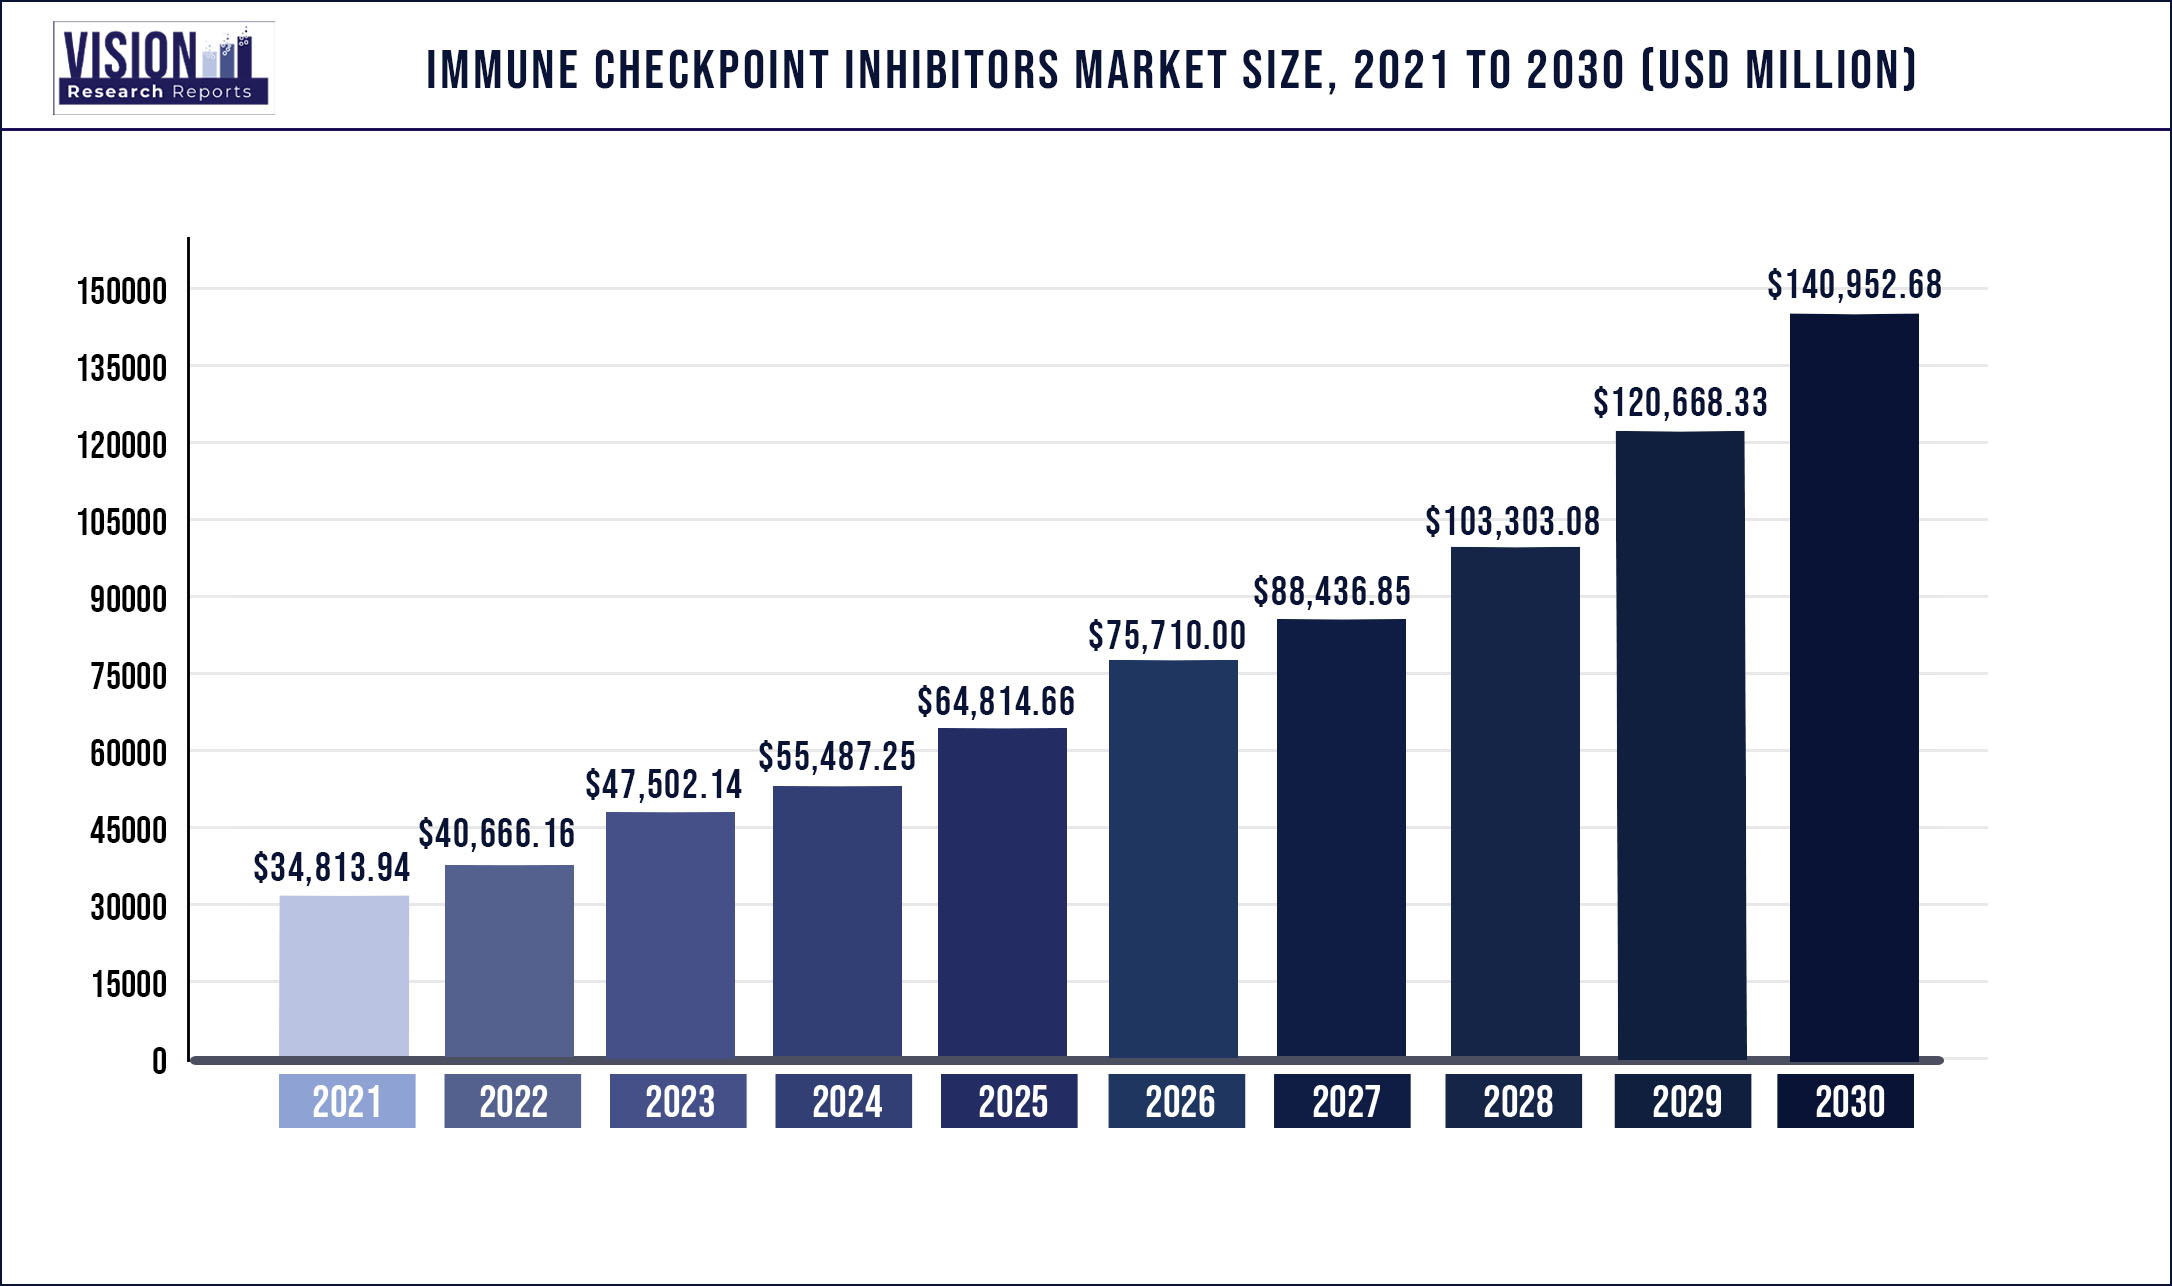 Immune Checkpoint Inhibitors Market Size 2021 to 2030